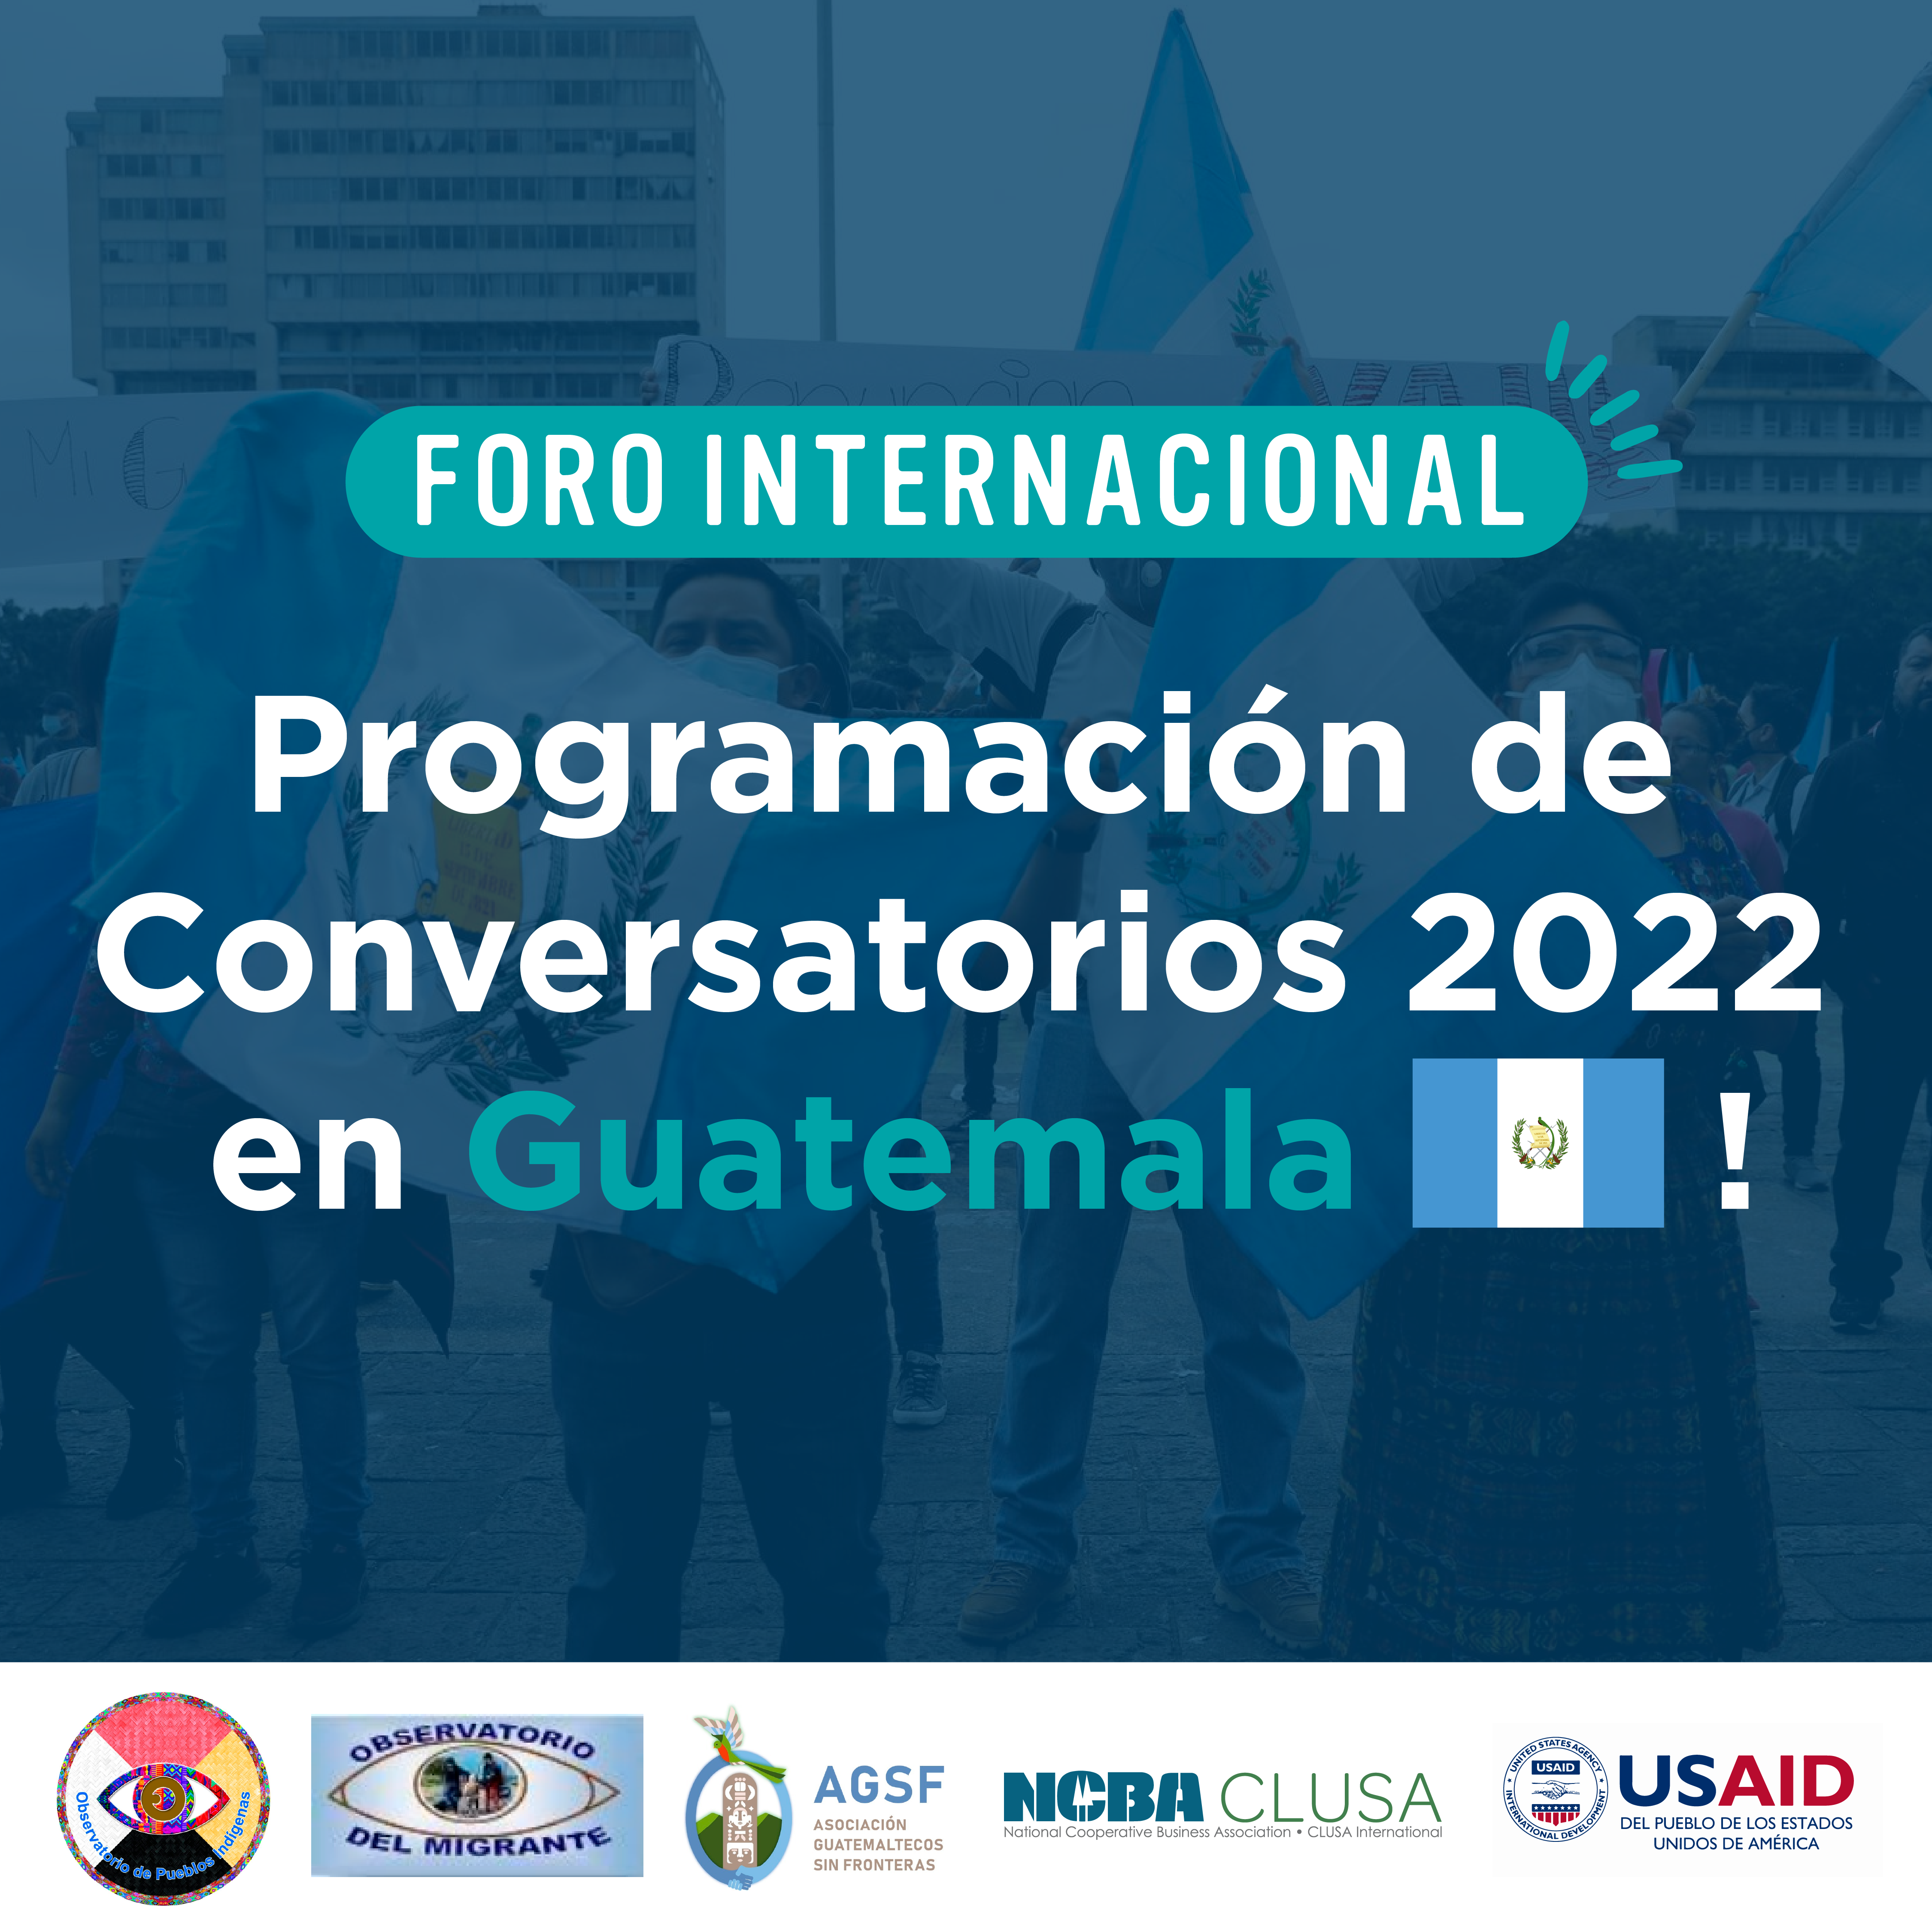 Programación de Conversatorios 2022 en Guatemala